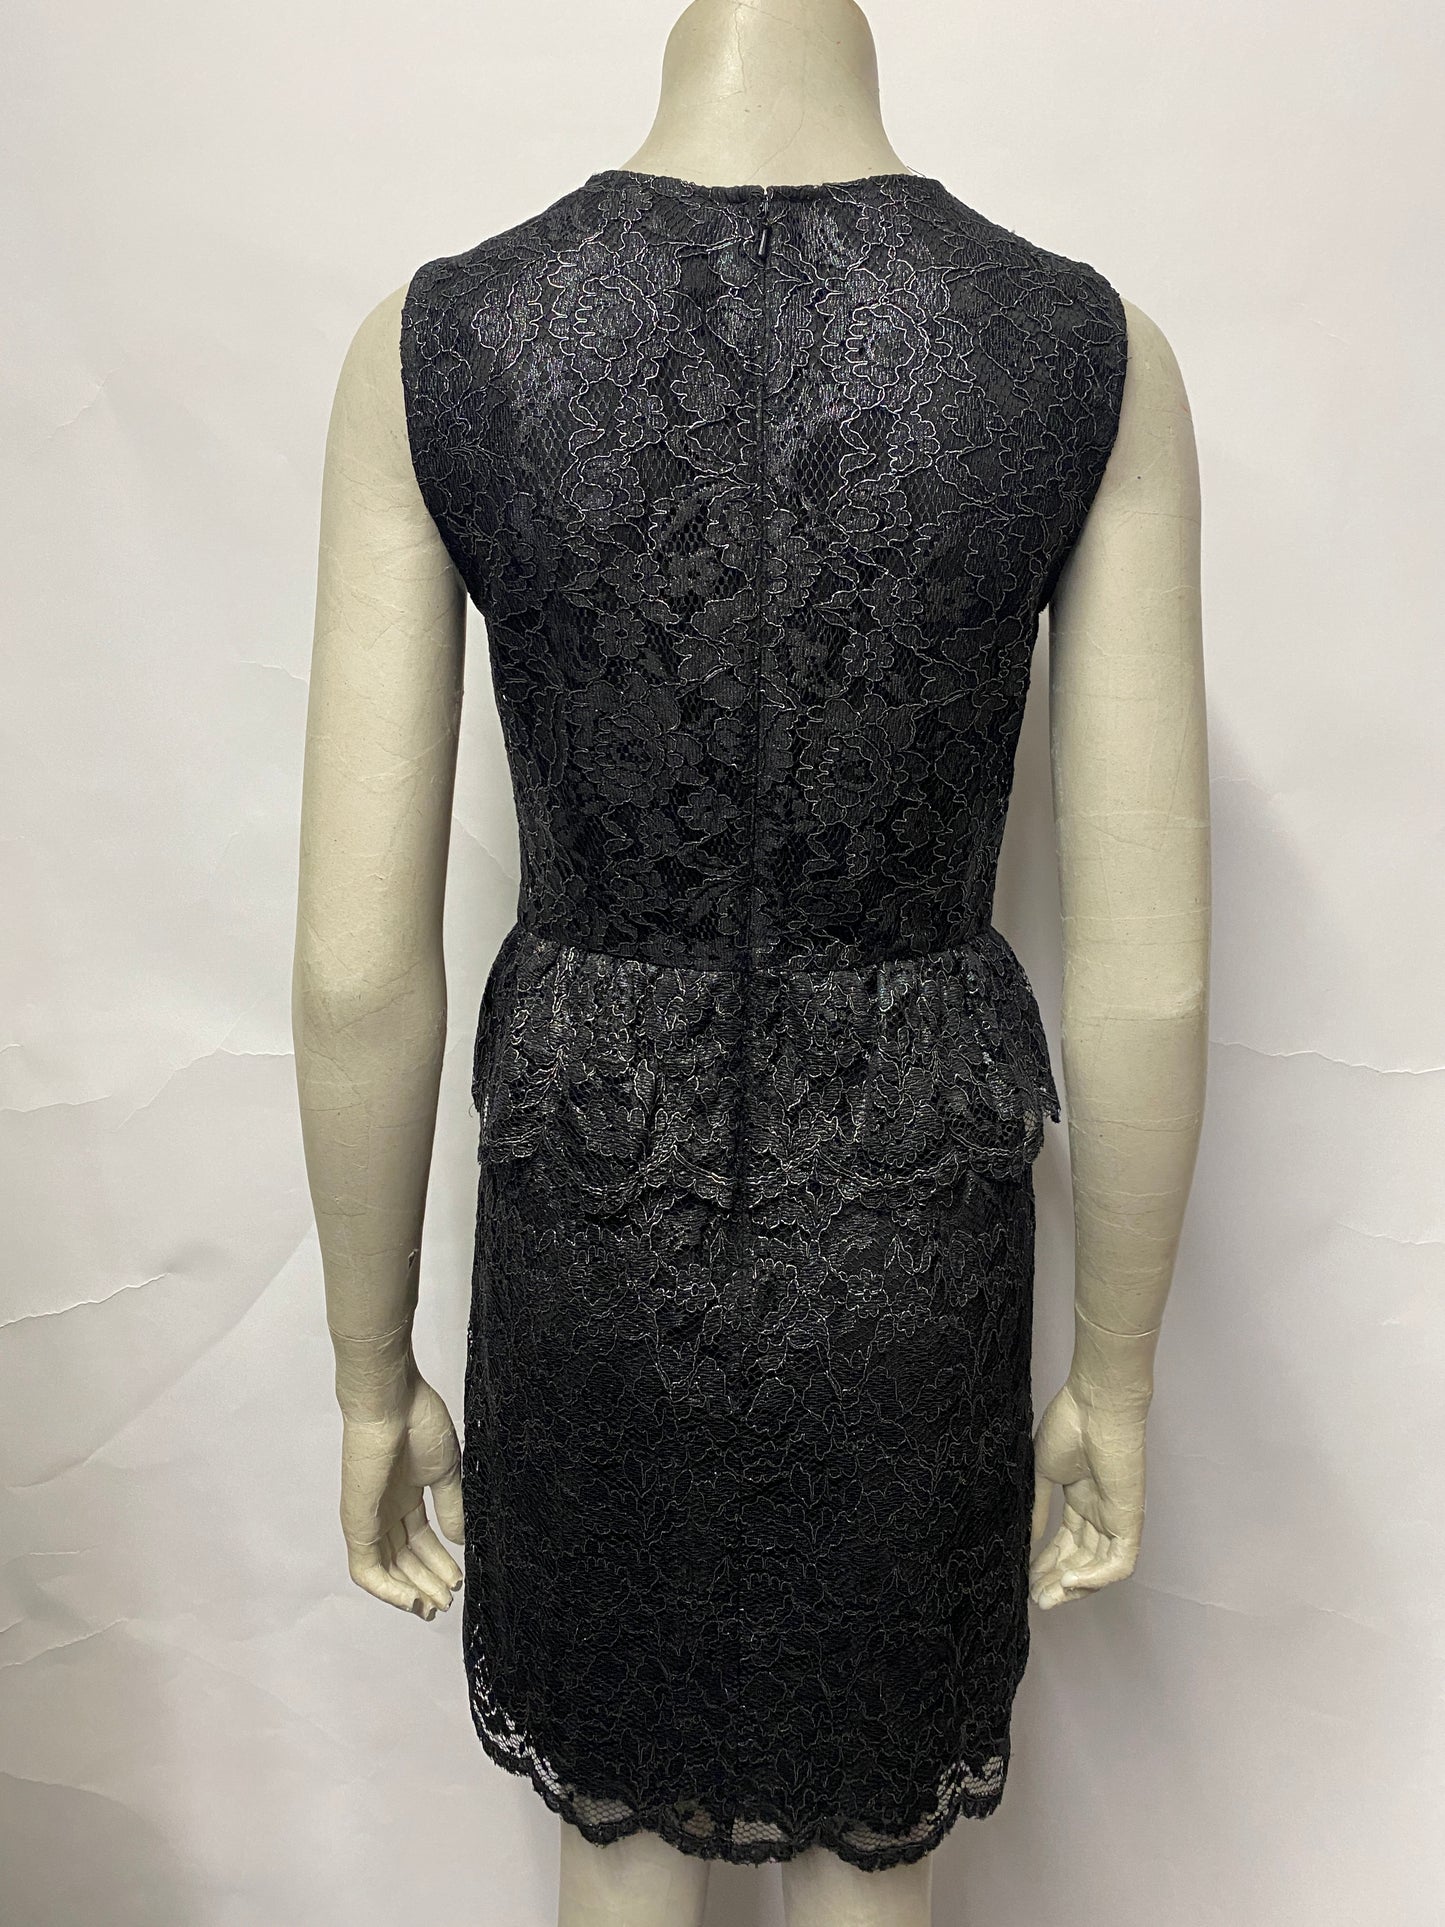 DKNY Black Metallic Lace Peplum Dress 6